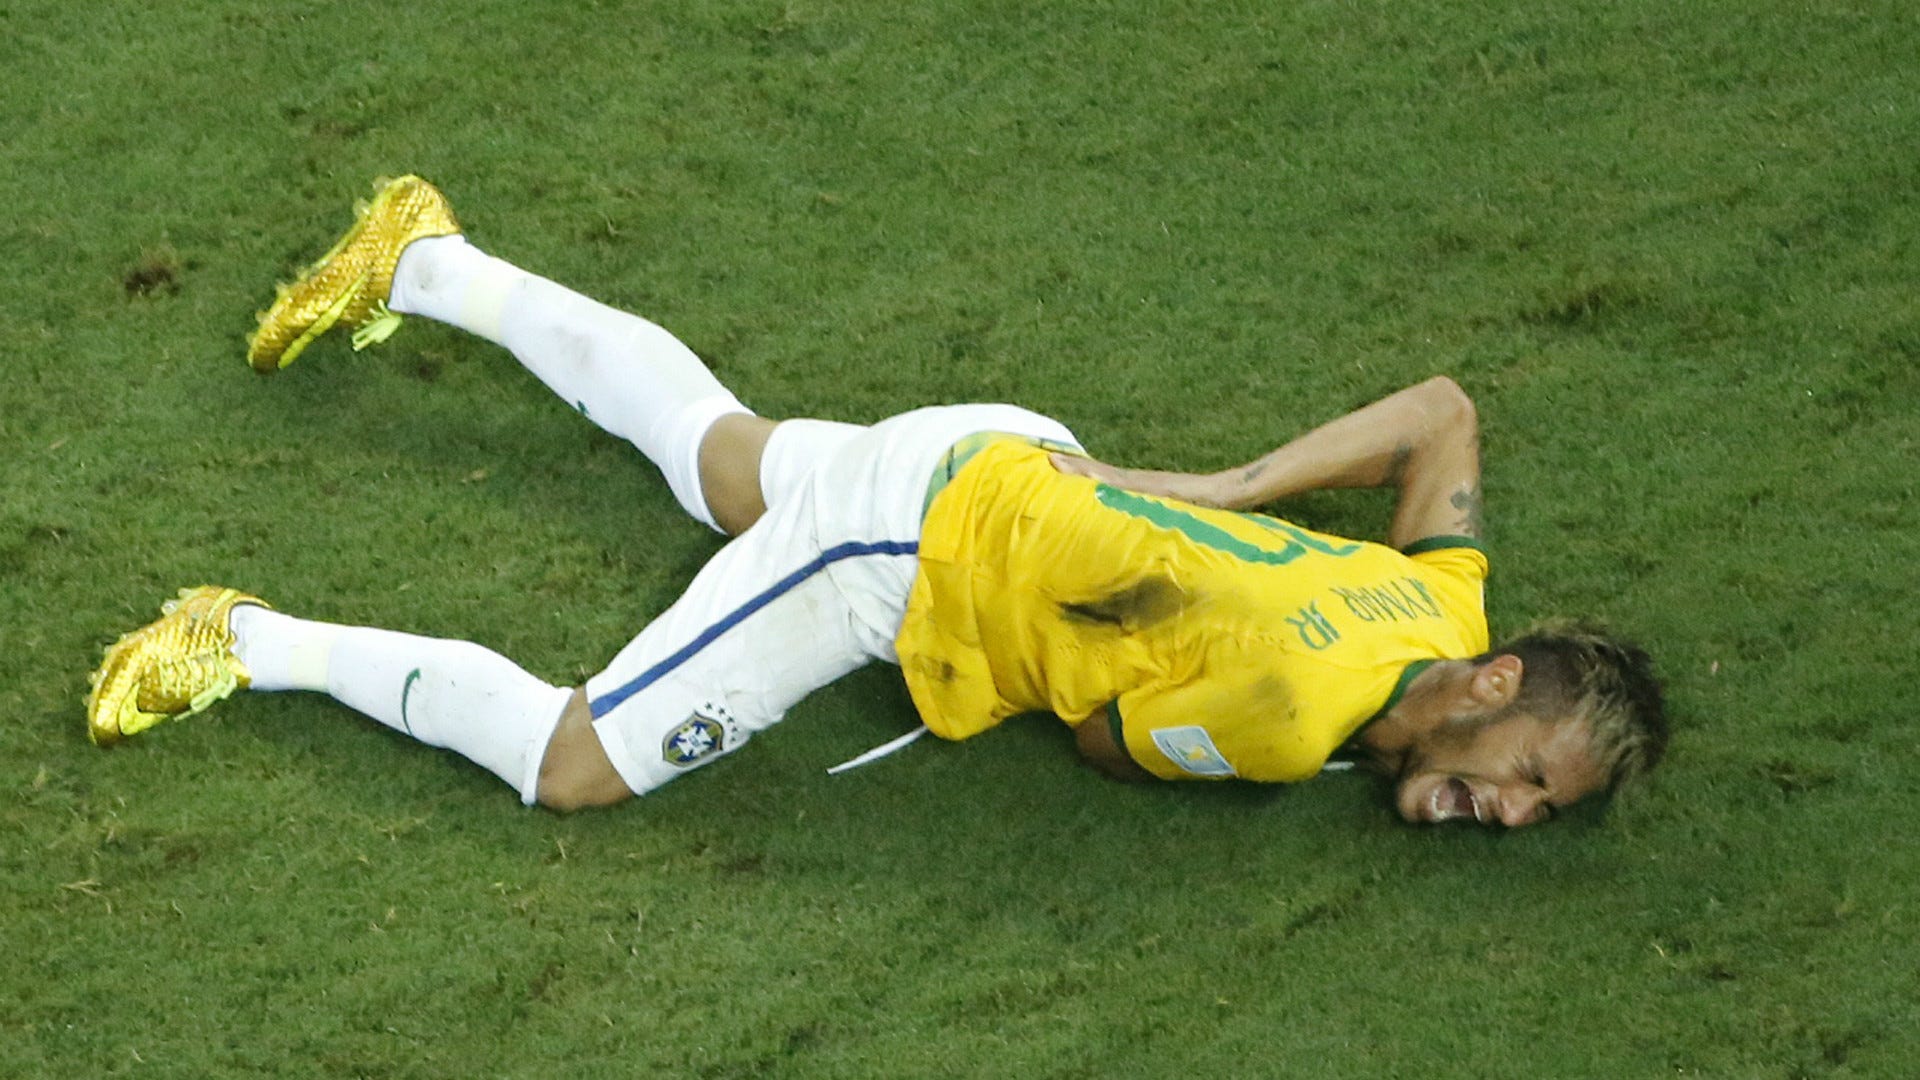 Neymar recalls 2014 injury: I nearly lost ability to walk | Goal.com